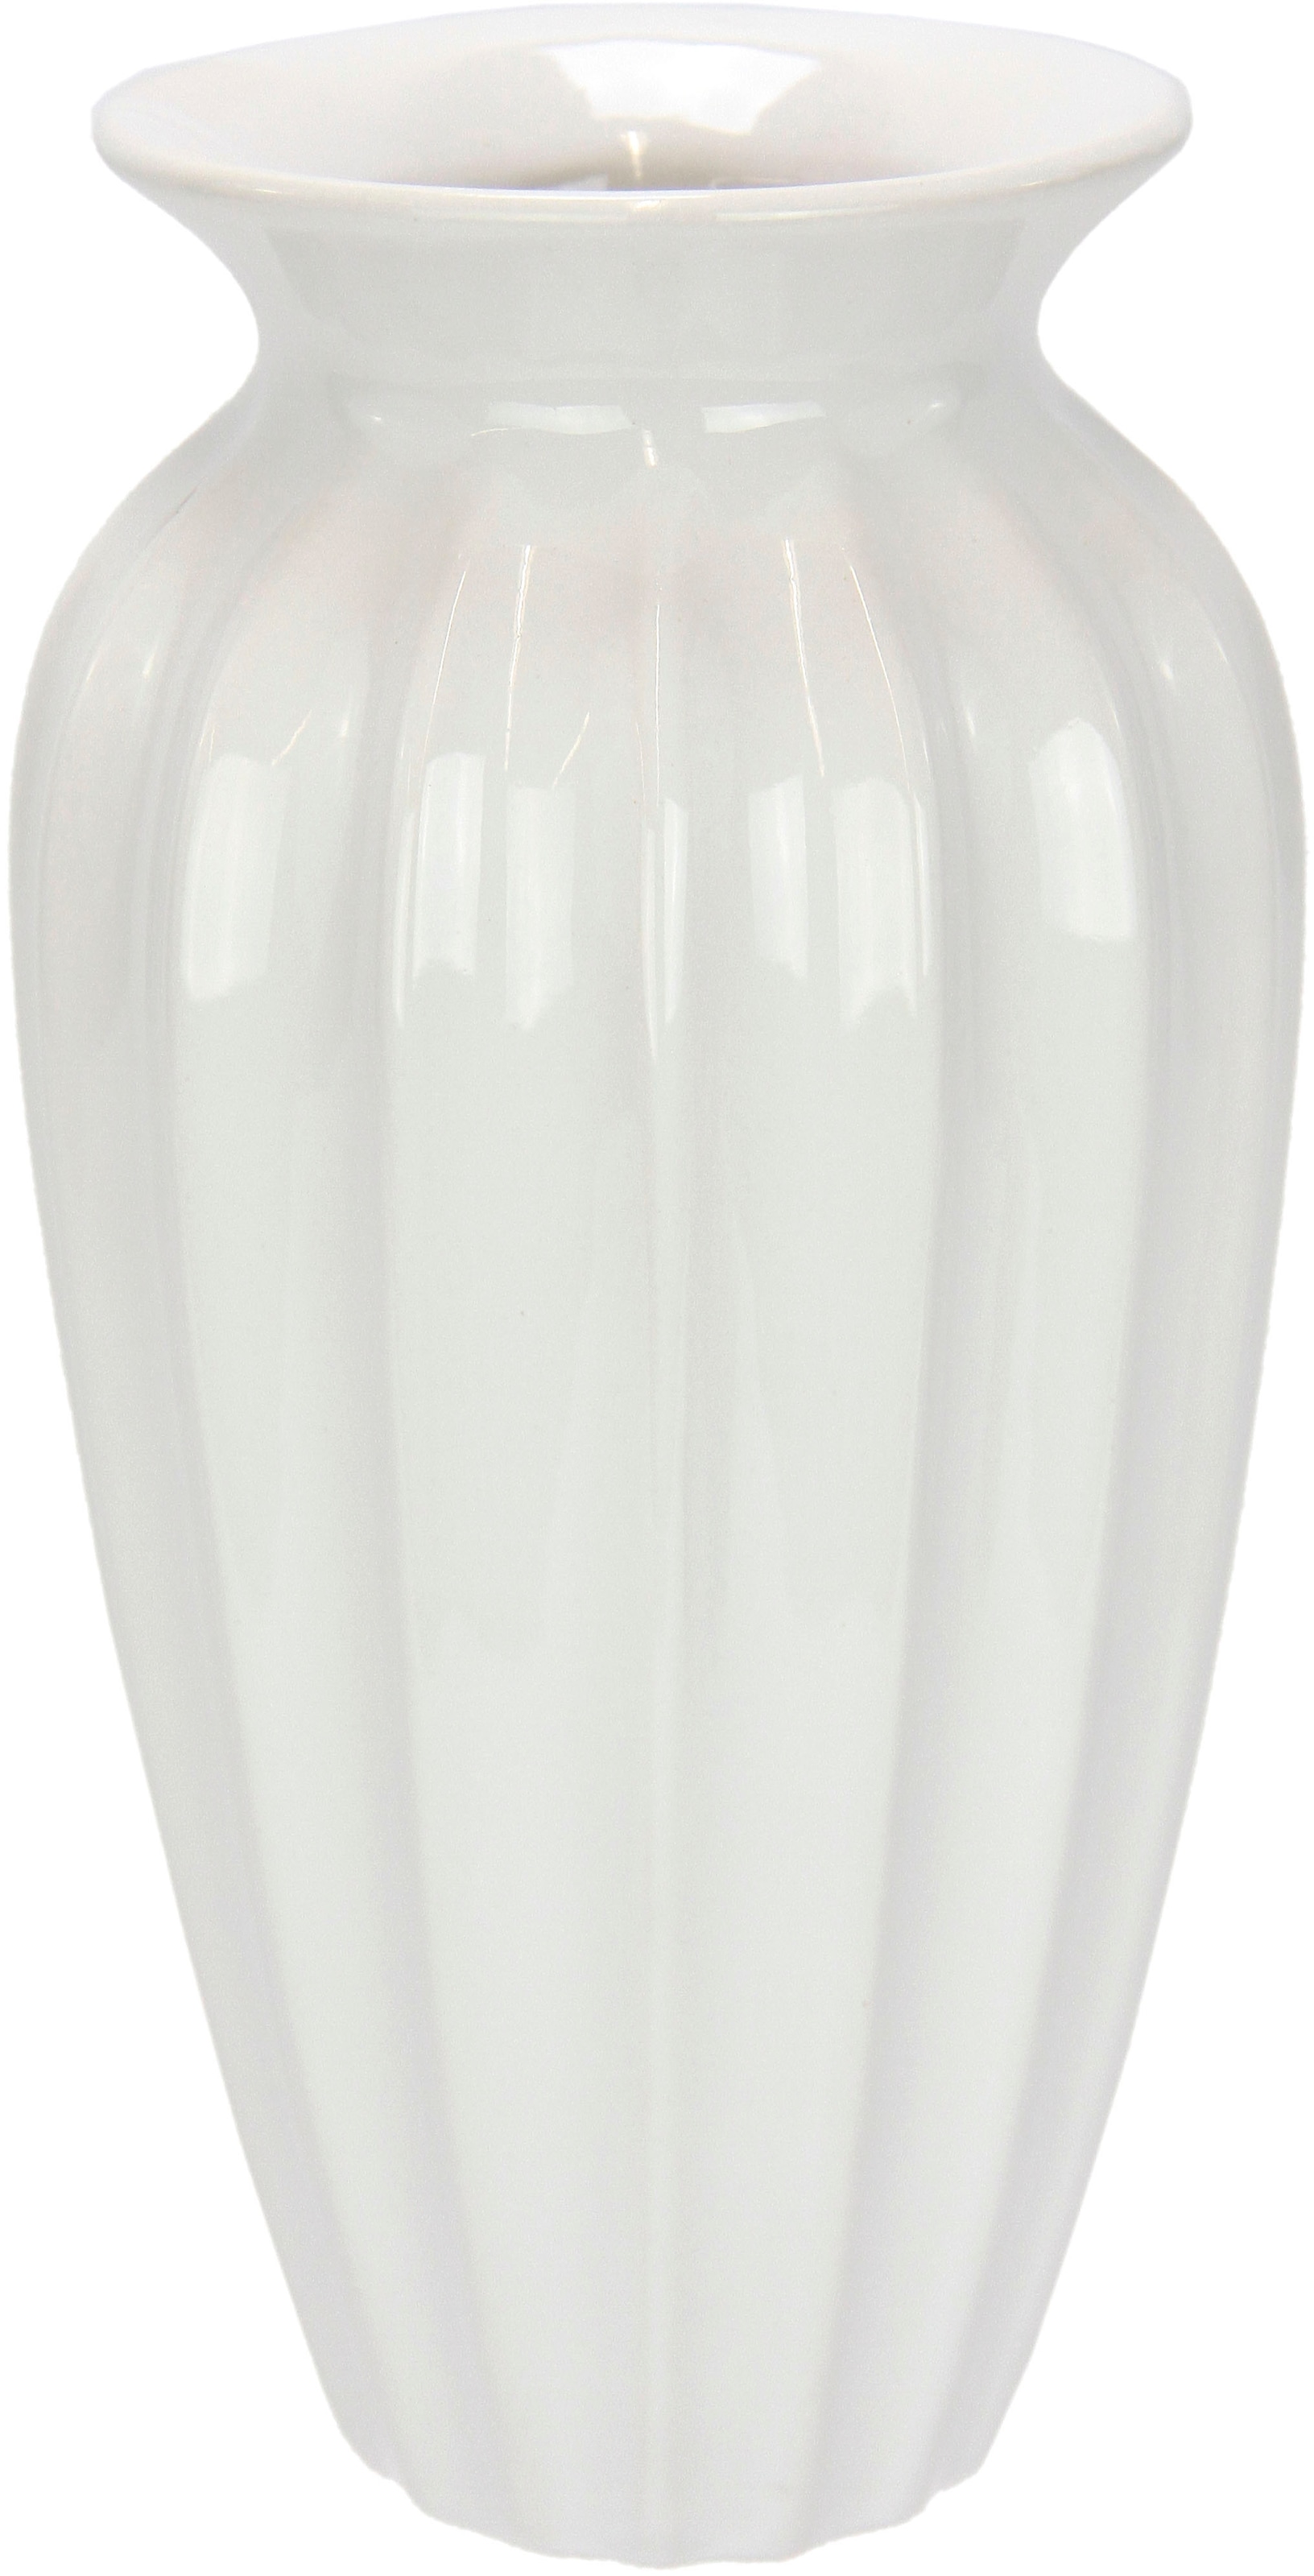 I.GE.A. Dekovase »Keramik Vase«, Aus Keramik, gross rund